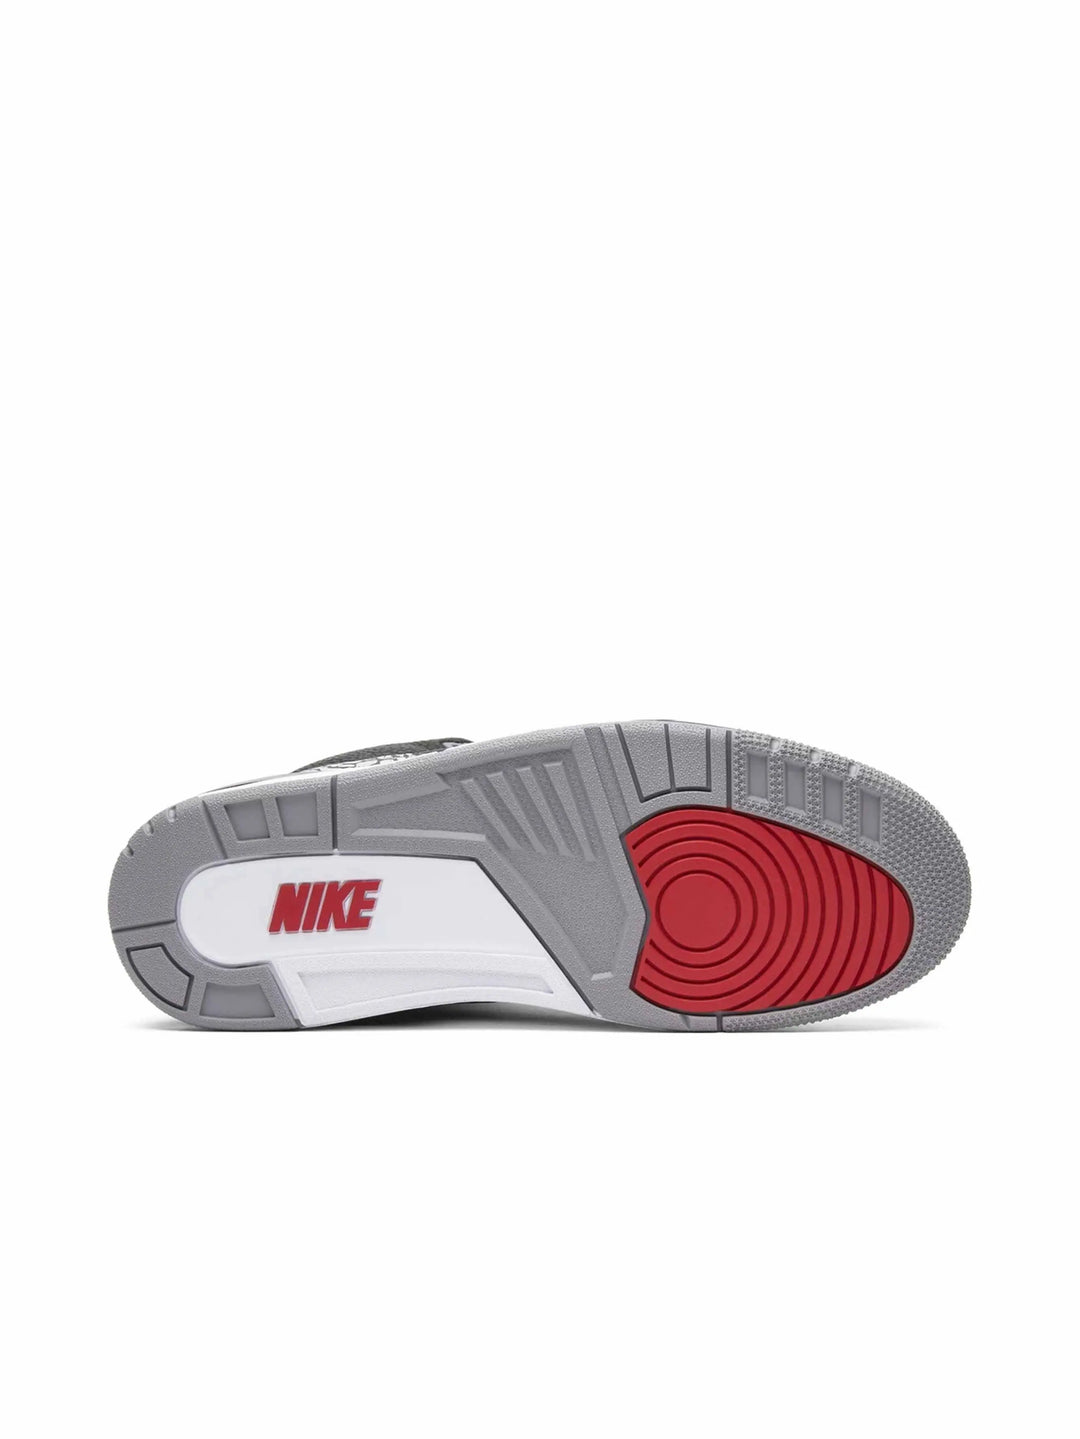 Nike Air Jordan 3 Retro Black Cement (2018) in Auckland, New Zealand - Shop name